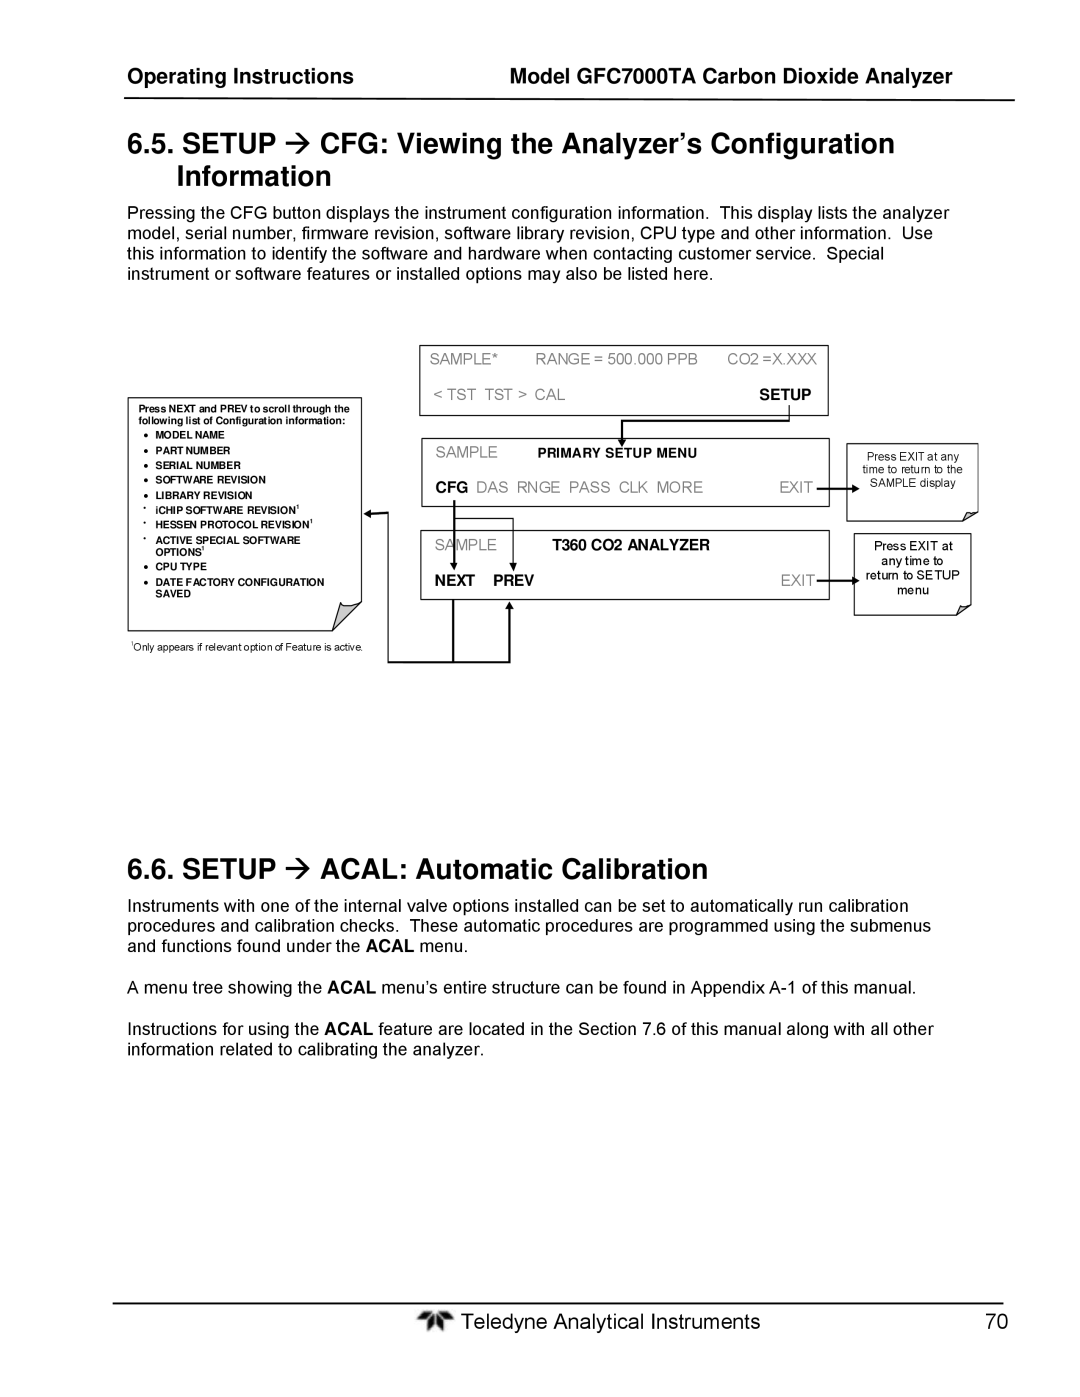 Teledyne gfc 7000ta Setup  CFG Viewing the Analyzer’s Configuration Information, Setup  Acal Automatic Calibration 